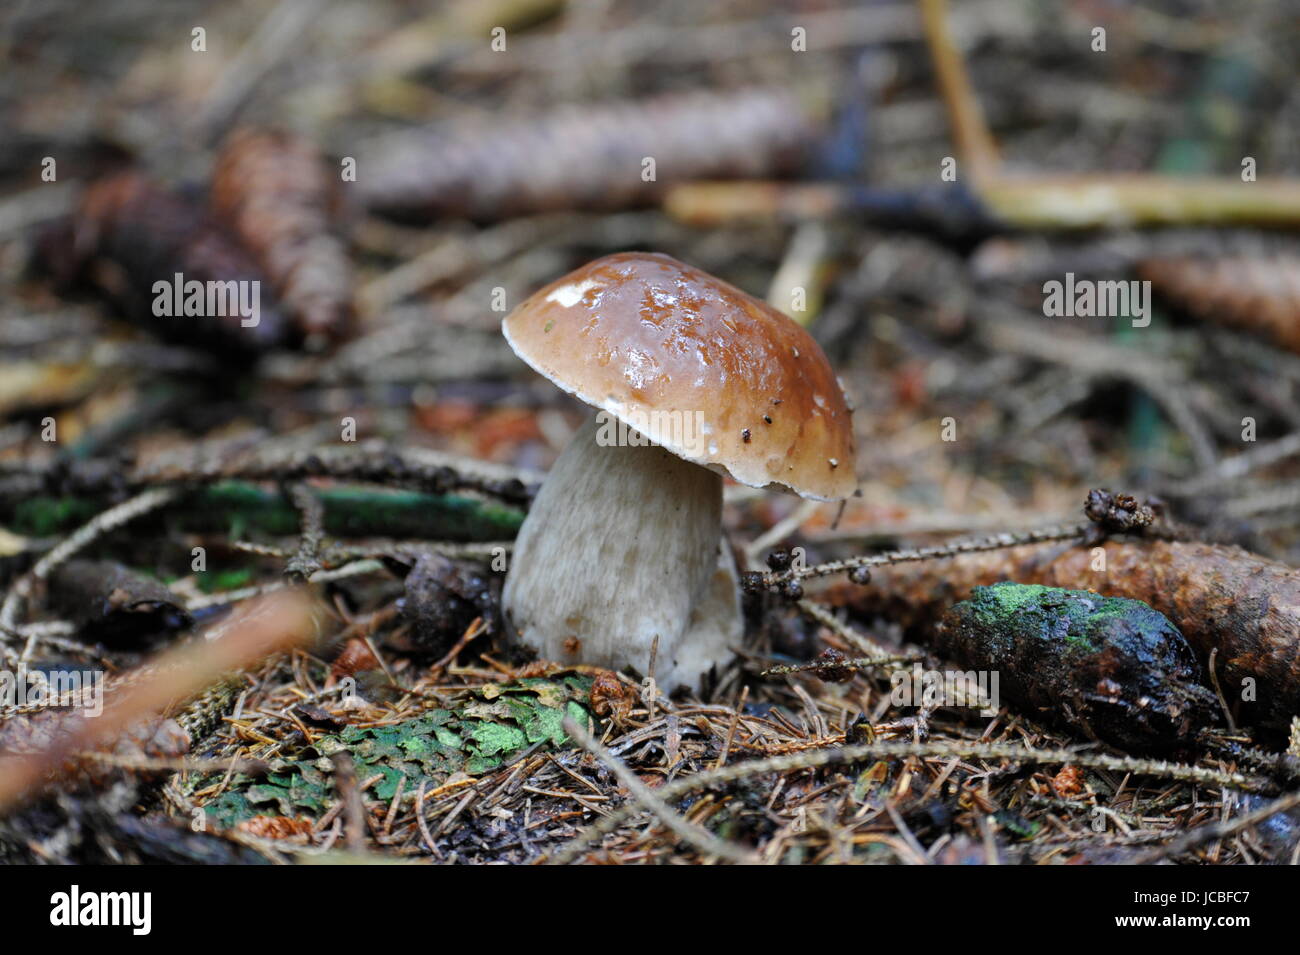 Young single porcini mushroom in grass Stock Photo